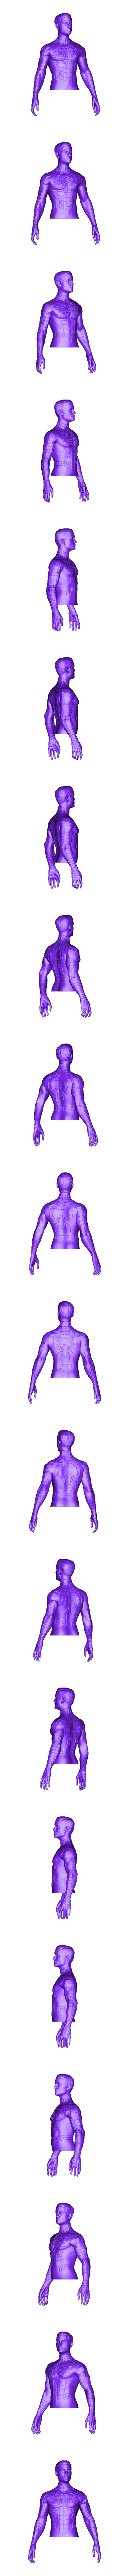 SPIDERMAN Tobey Maguire Torso.obj Download free OBJ file Spiderman Tobey Maguire • 3D printing template, SalazarKane